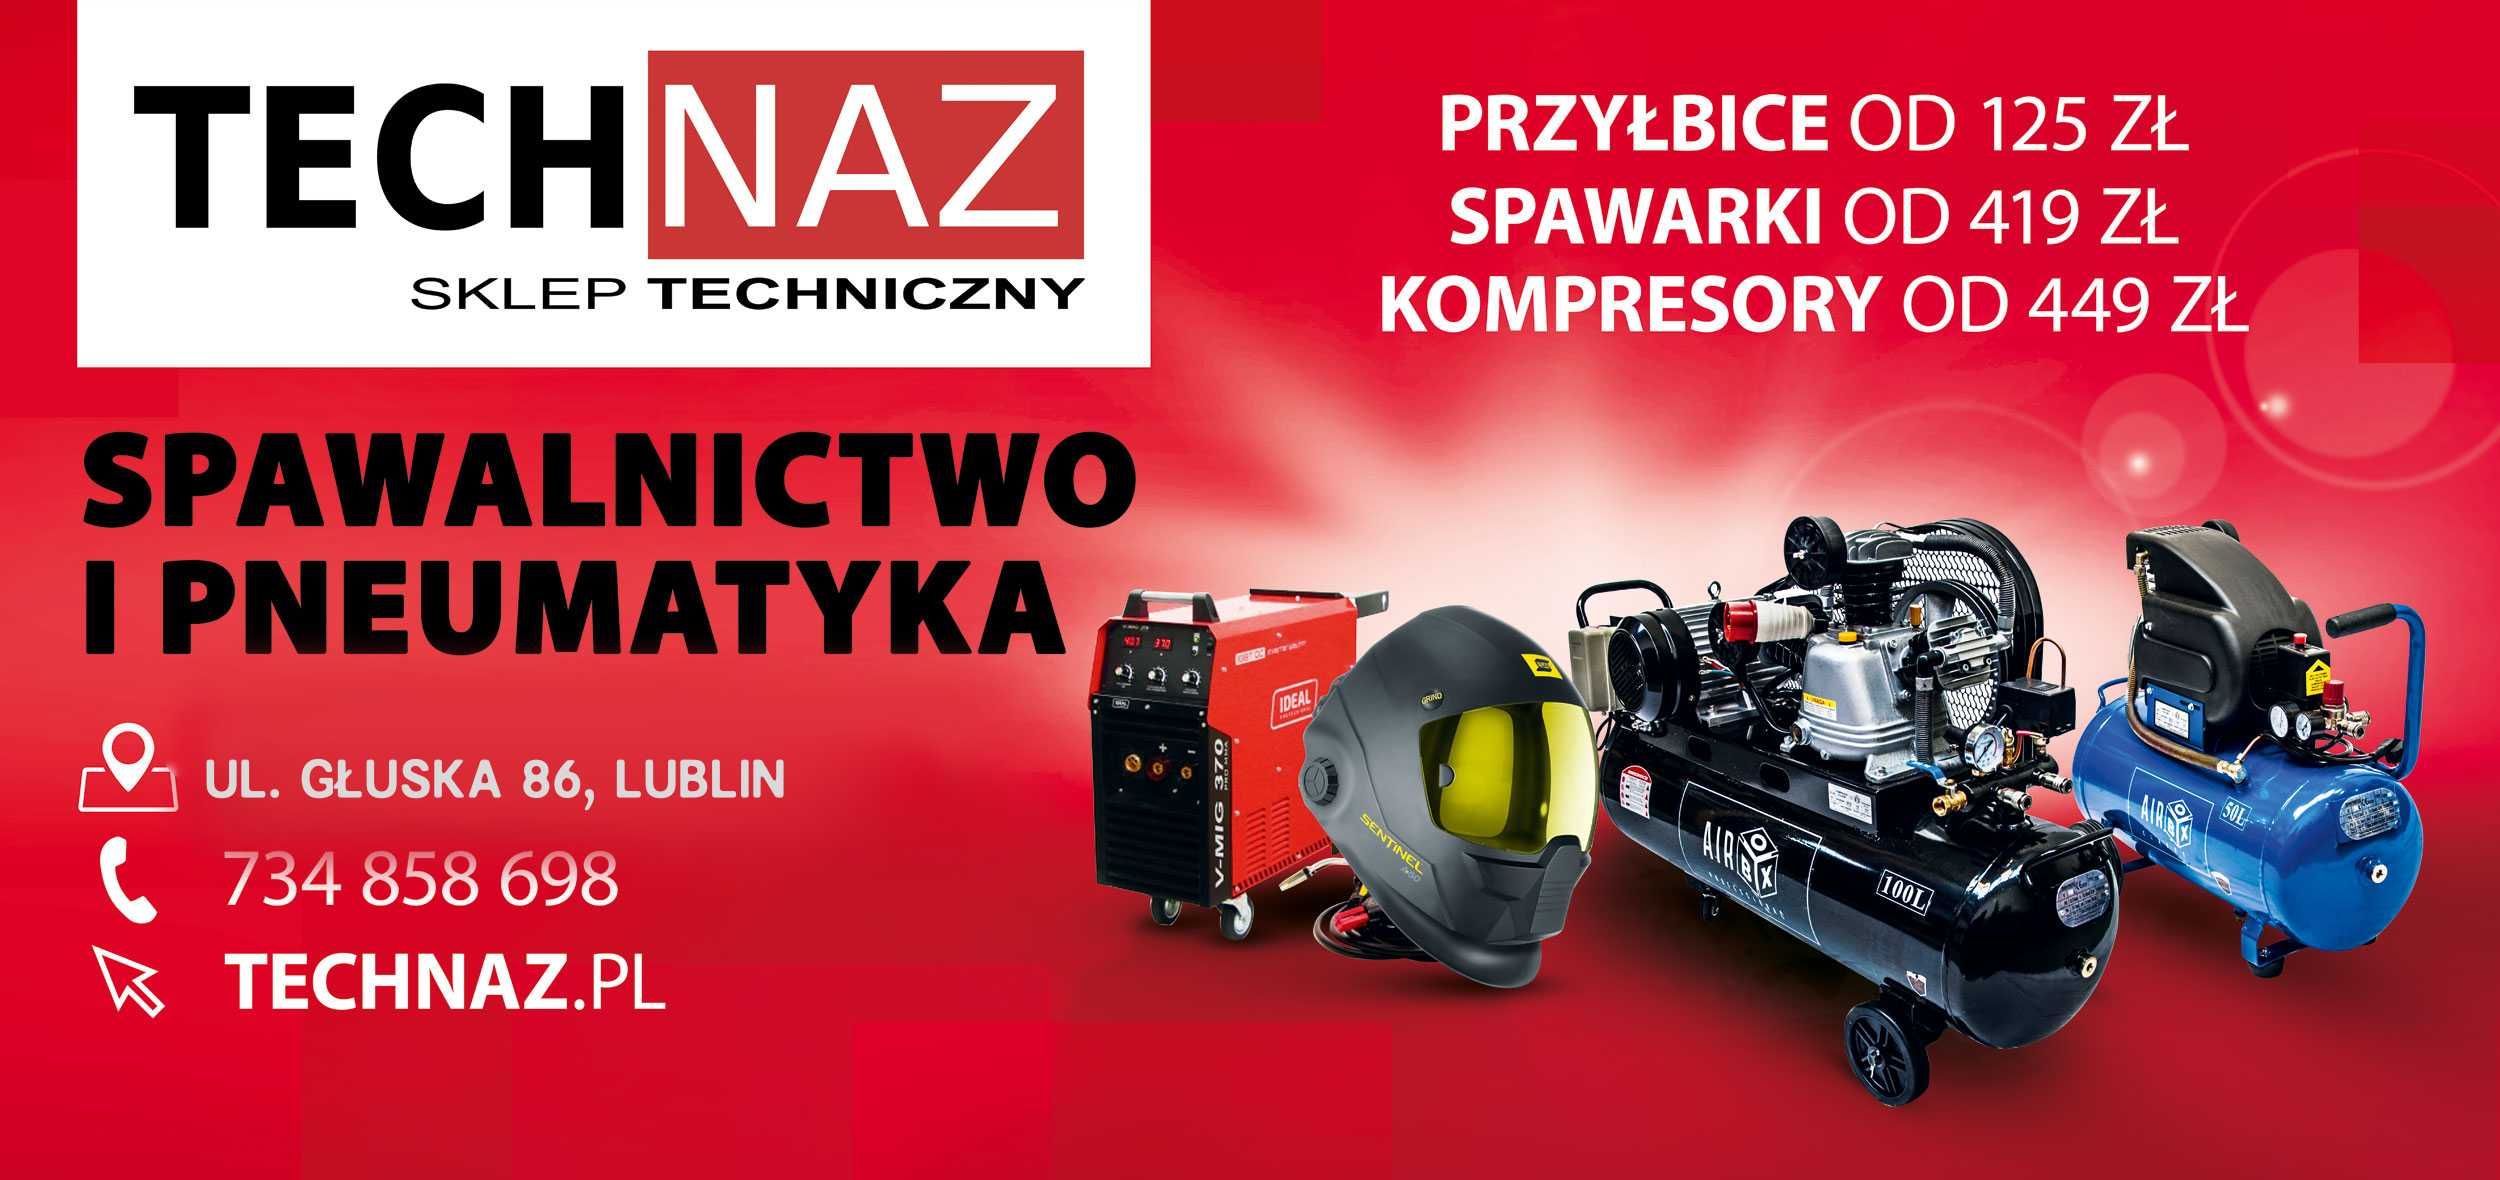 Prostownik Ideal Praktik Charger 15 12V 2A 15A sklep Technaz Lublin